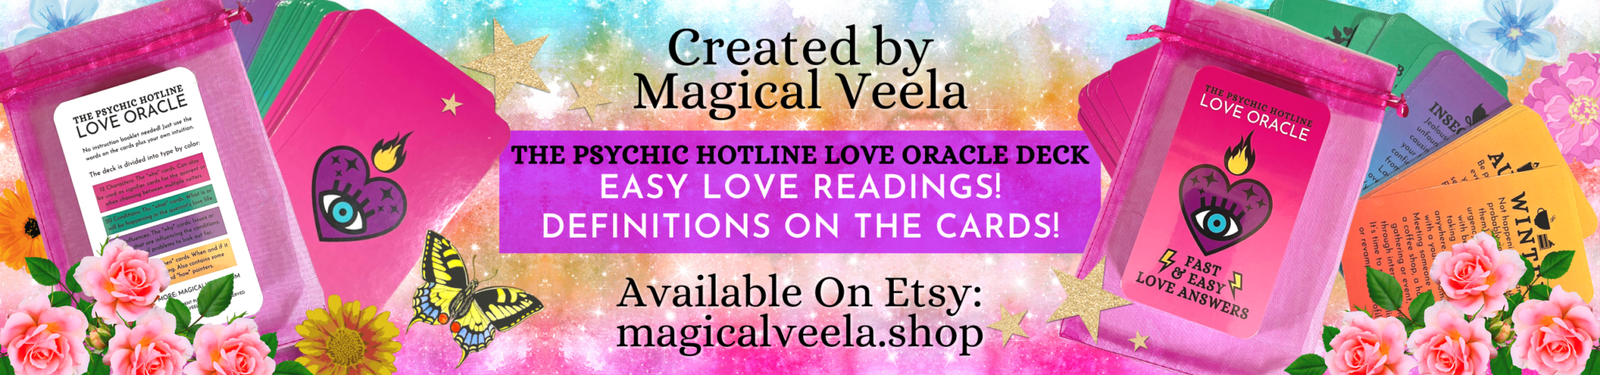 Psychic Hotline Love Oracle Deck